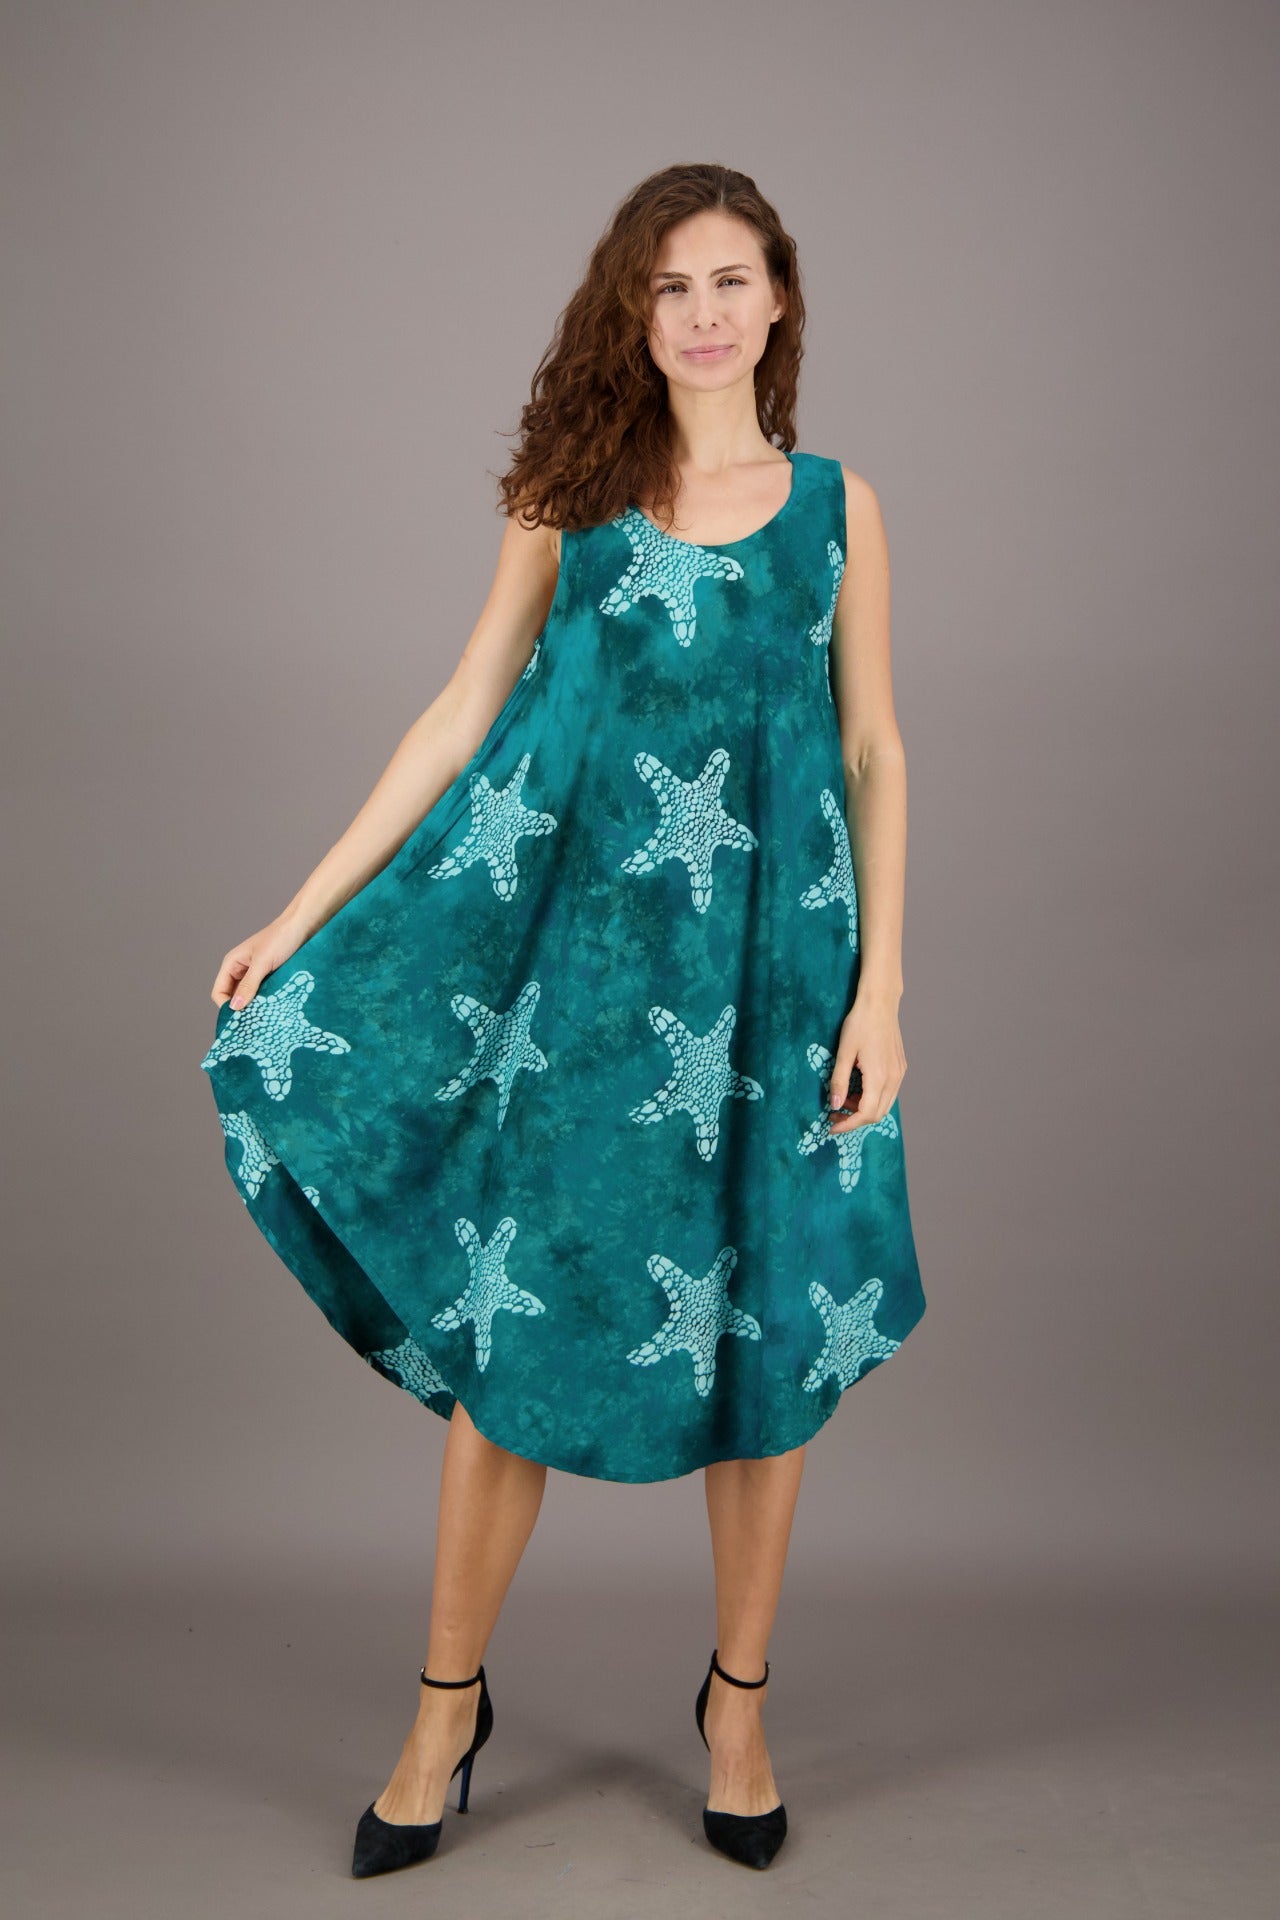 Starfish Pattern Beach Dress 17148